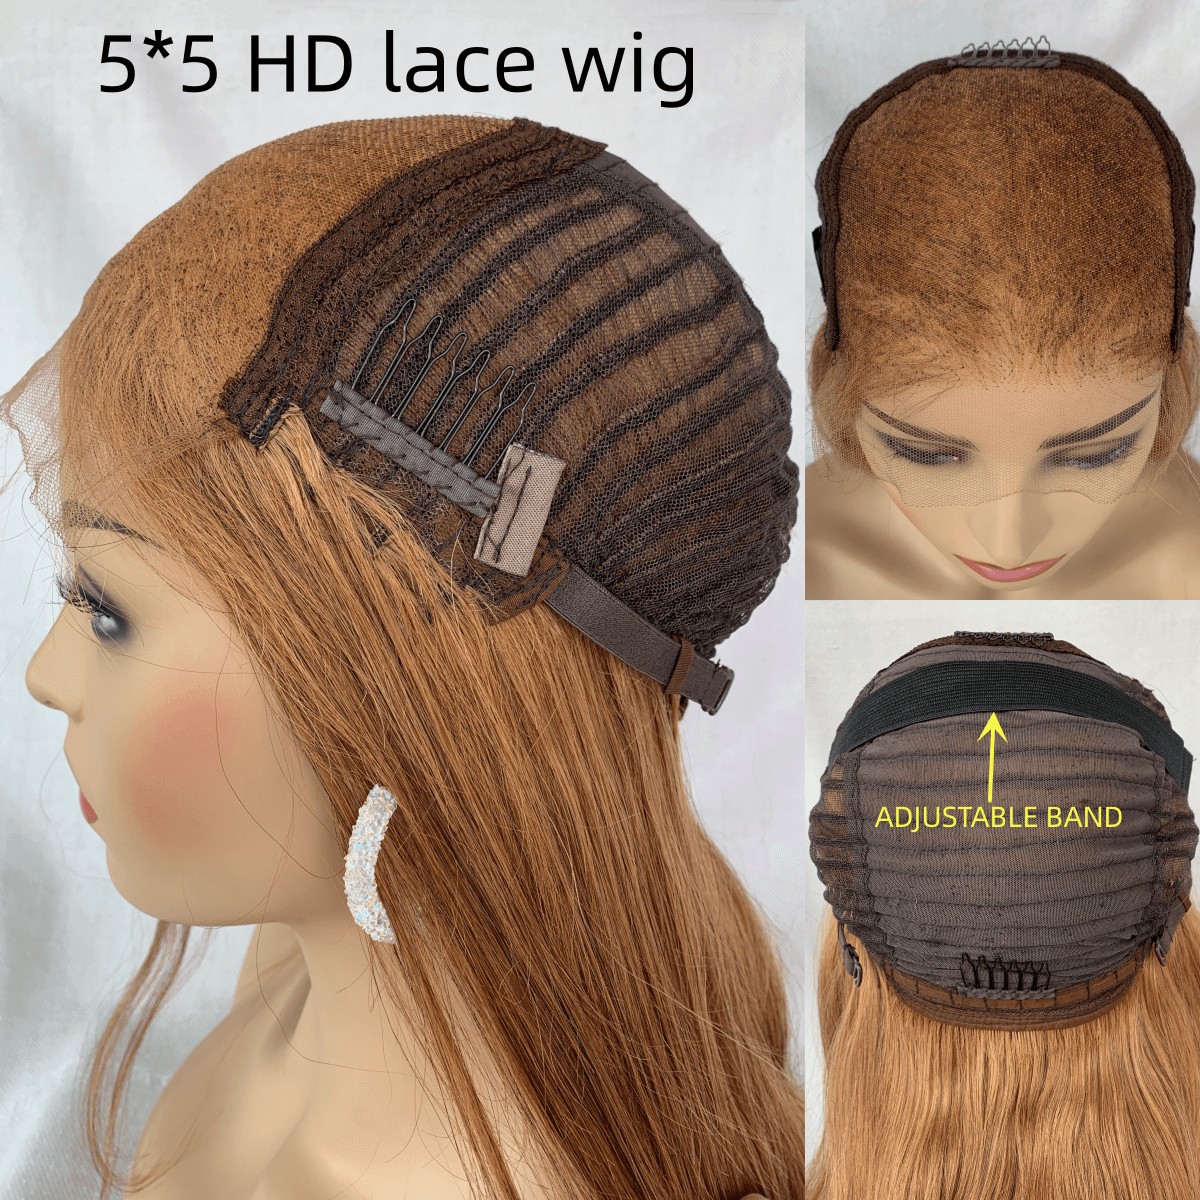 5*5 hd lace wig